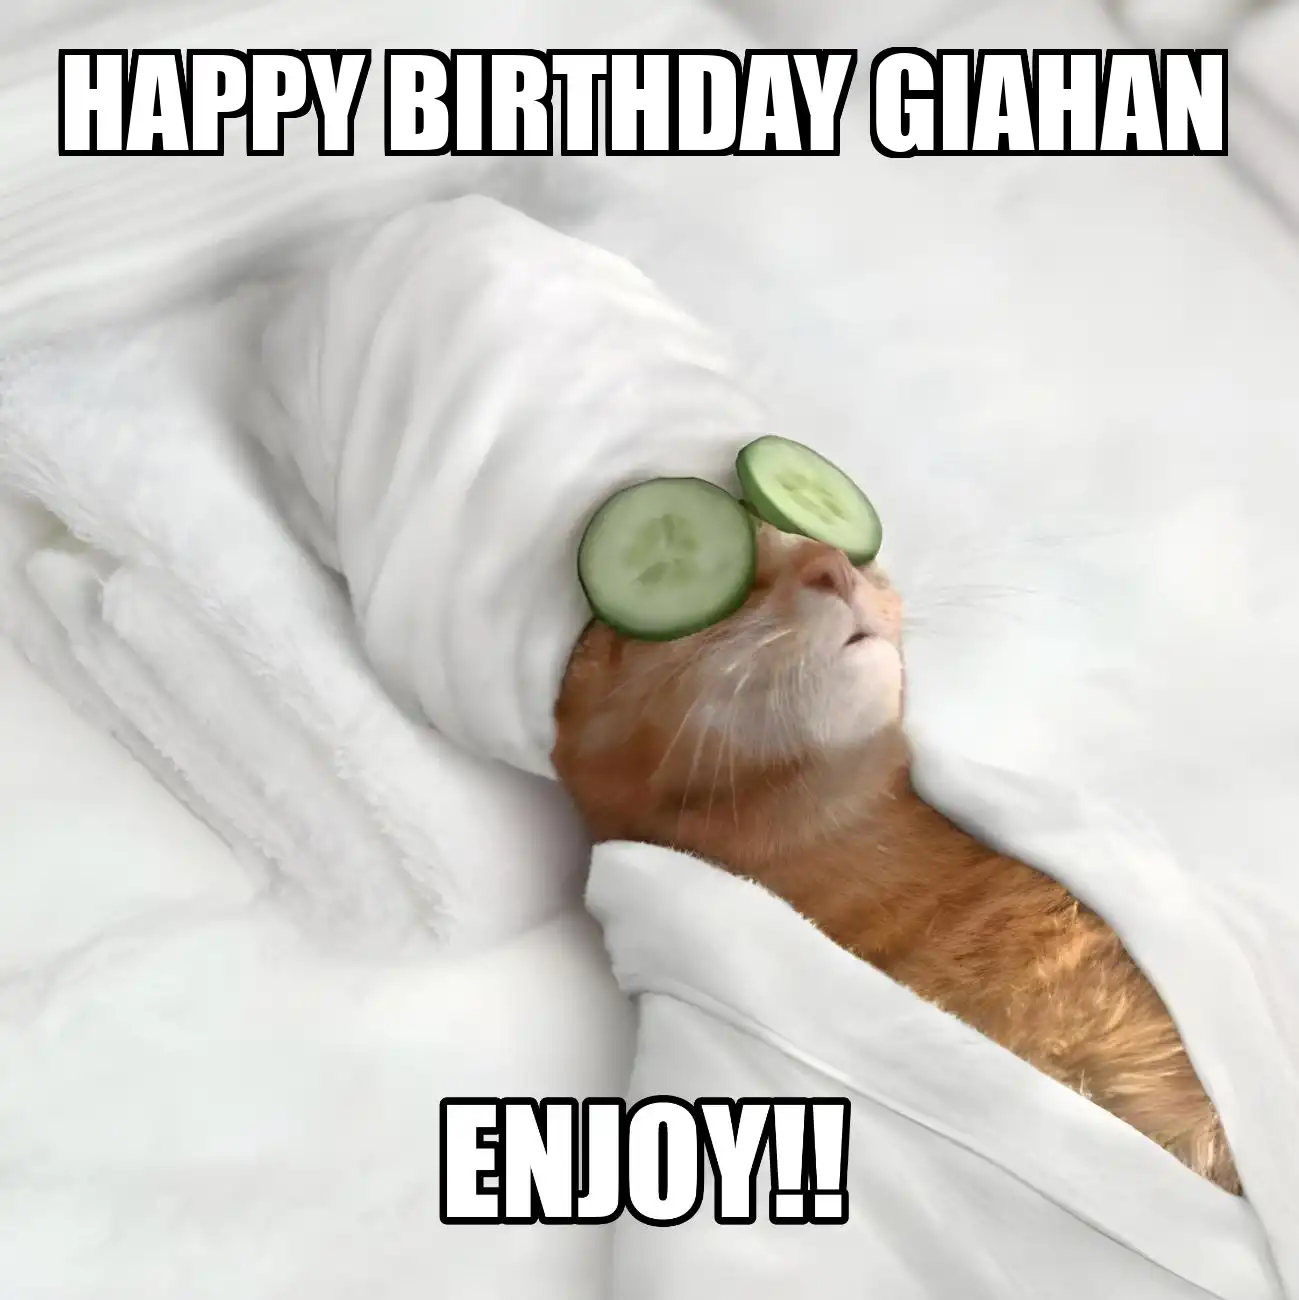 Happy Birthday Giahan Enjoy Cat Meme